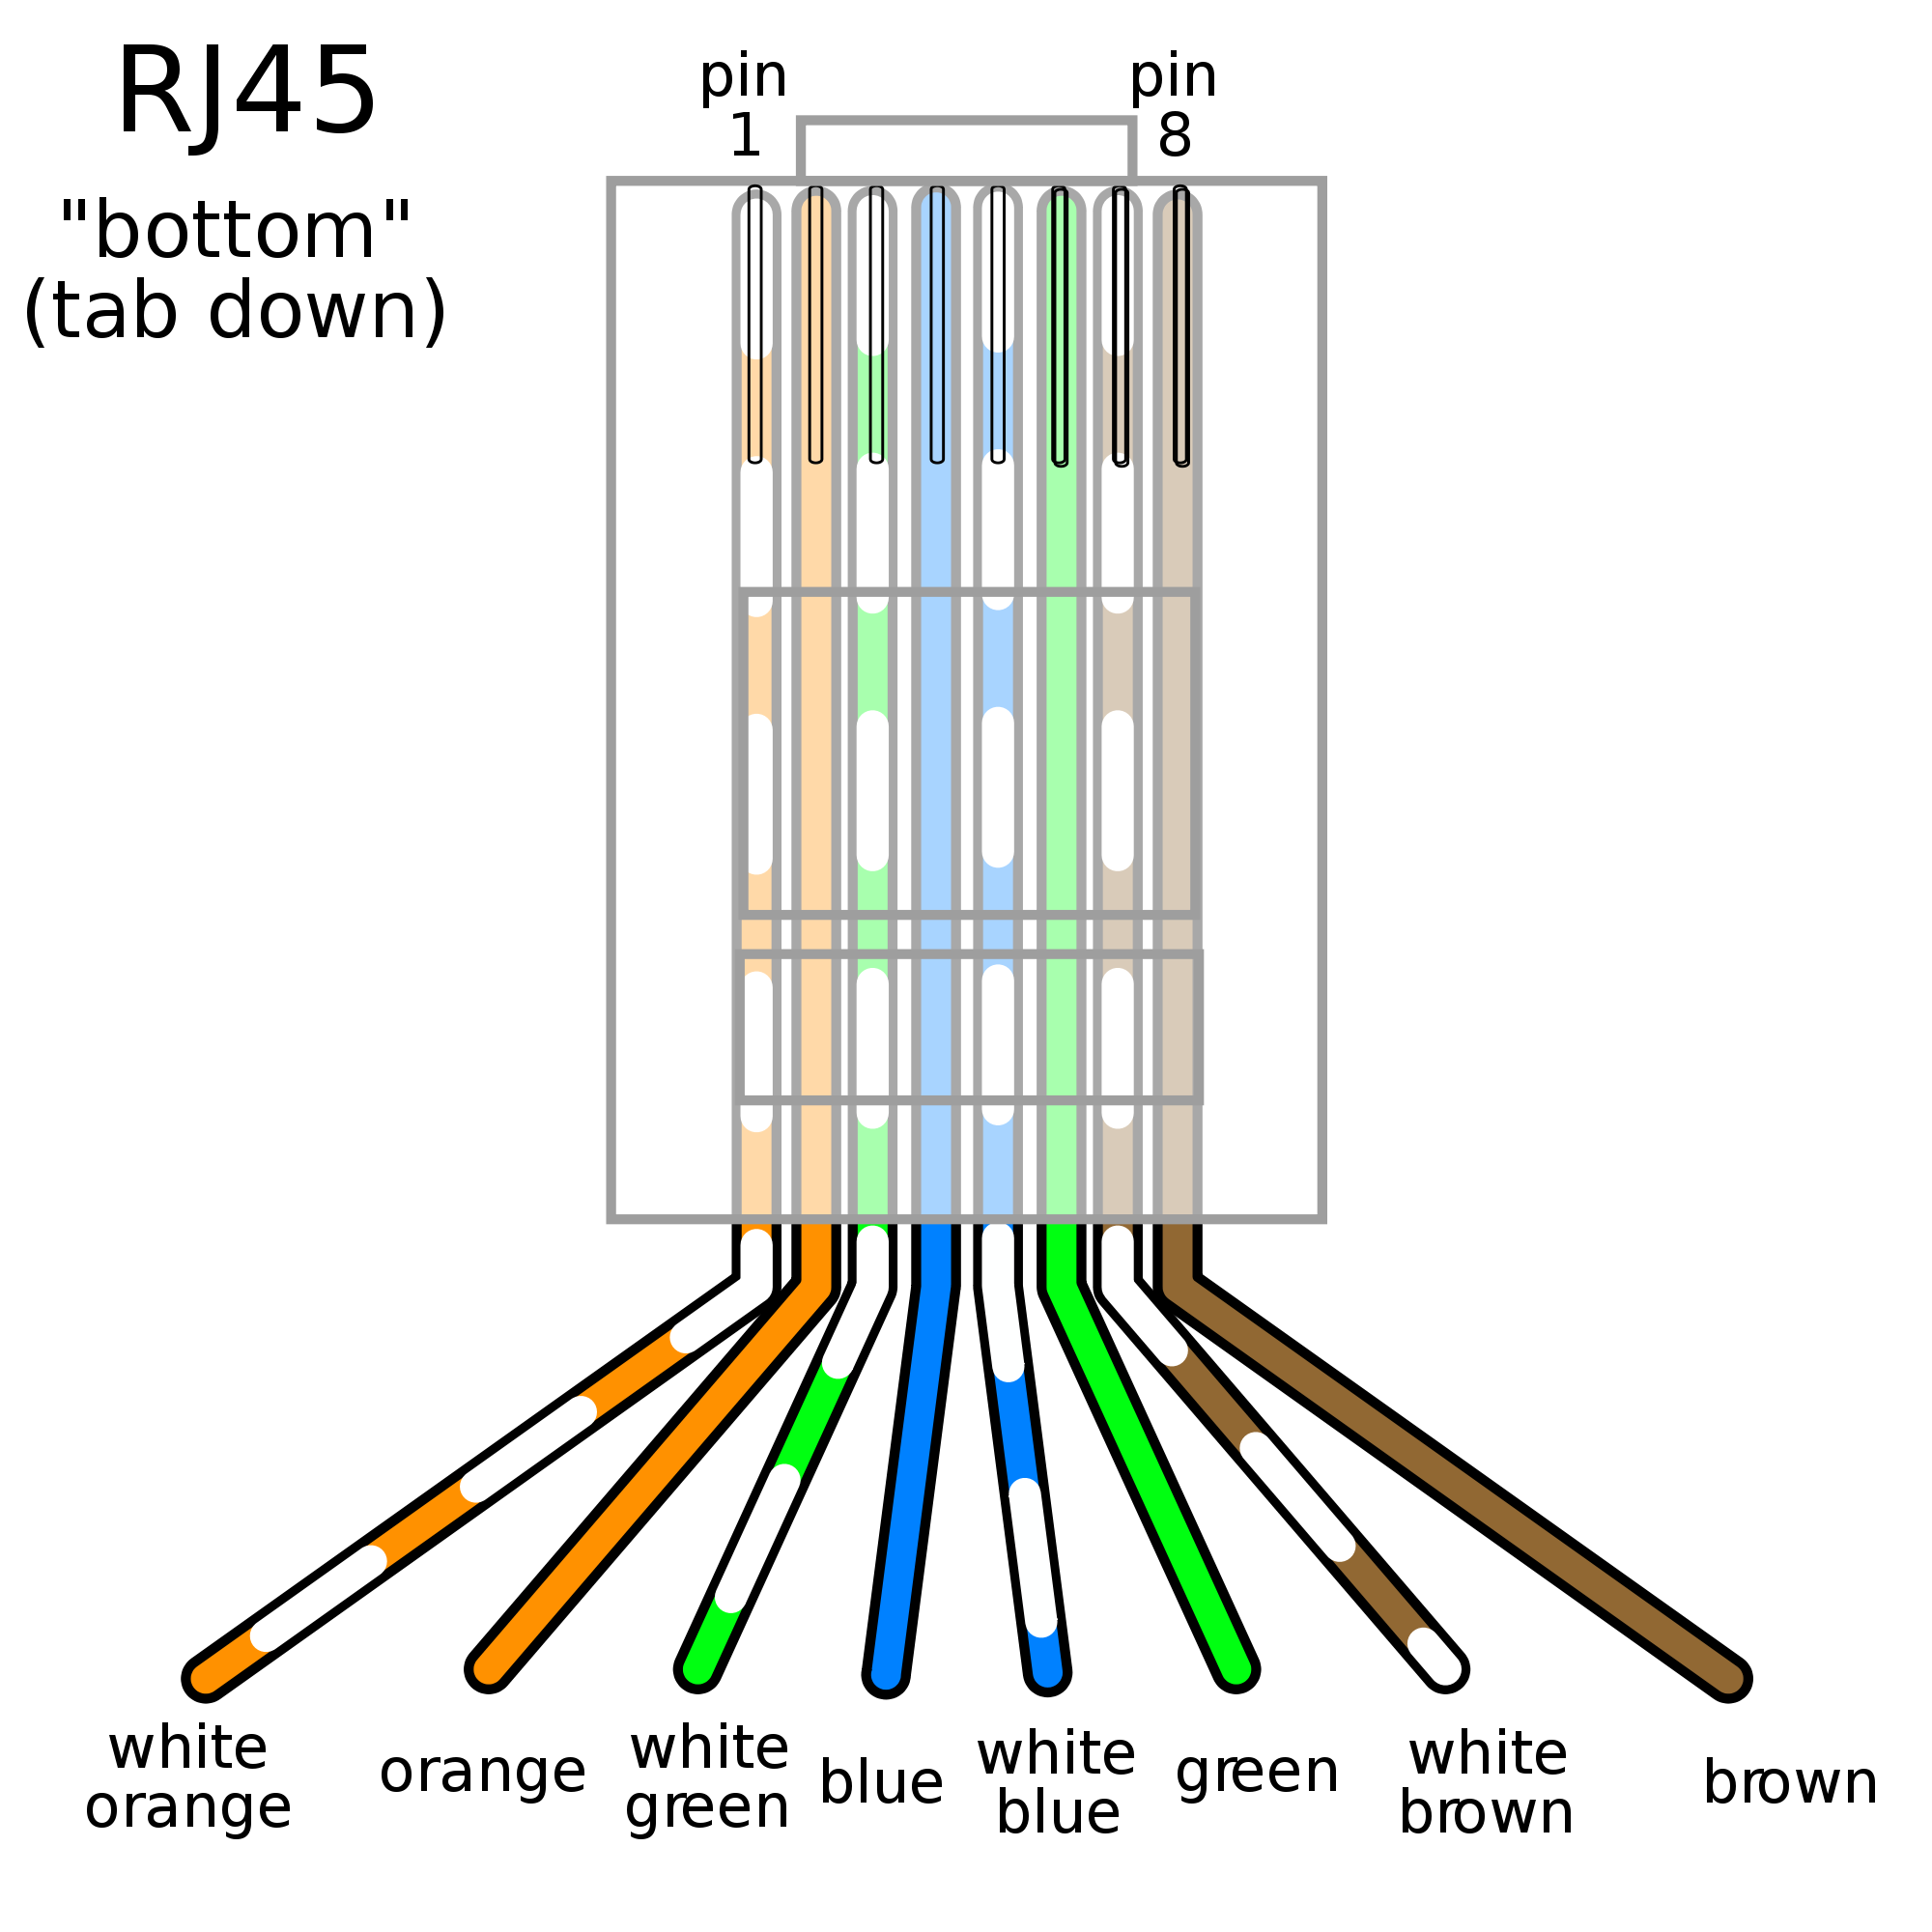 Cat 6e Ethernet Wiring Diagram